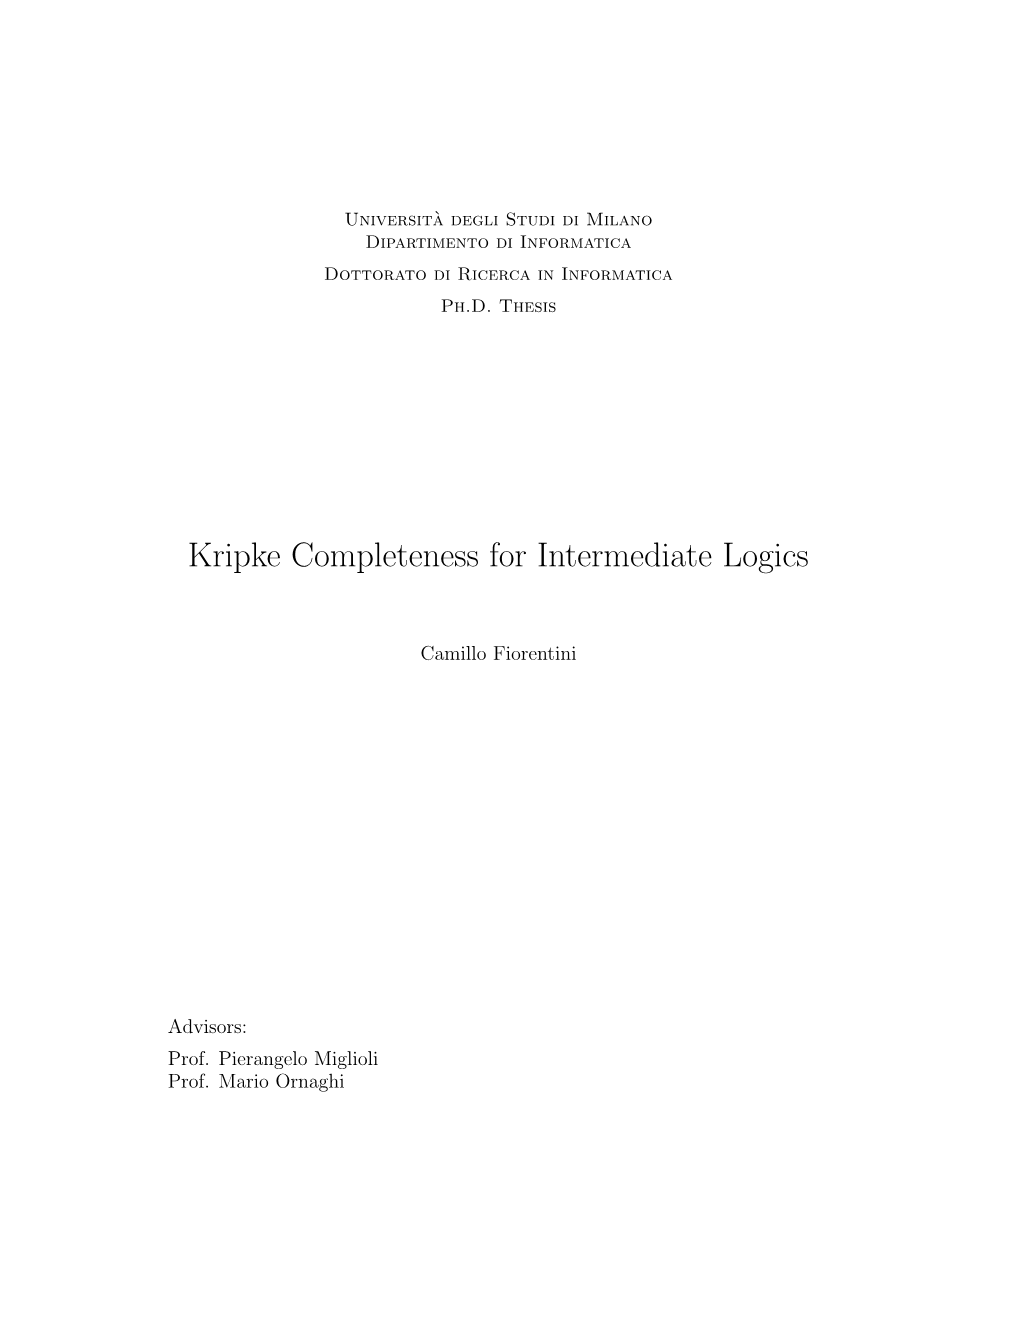 Kripke Completeness for Intermediate Logics